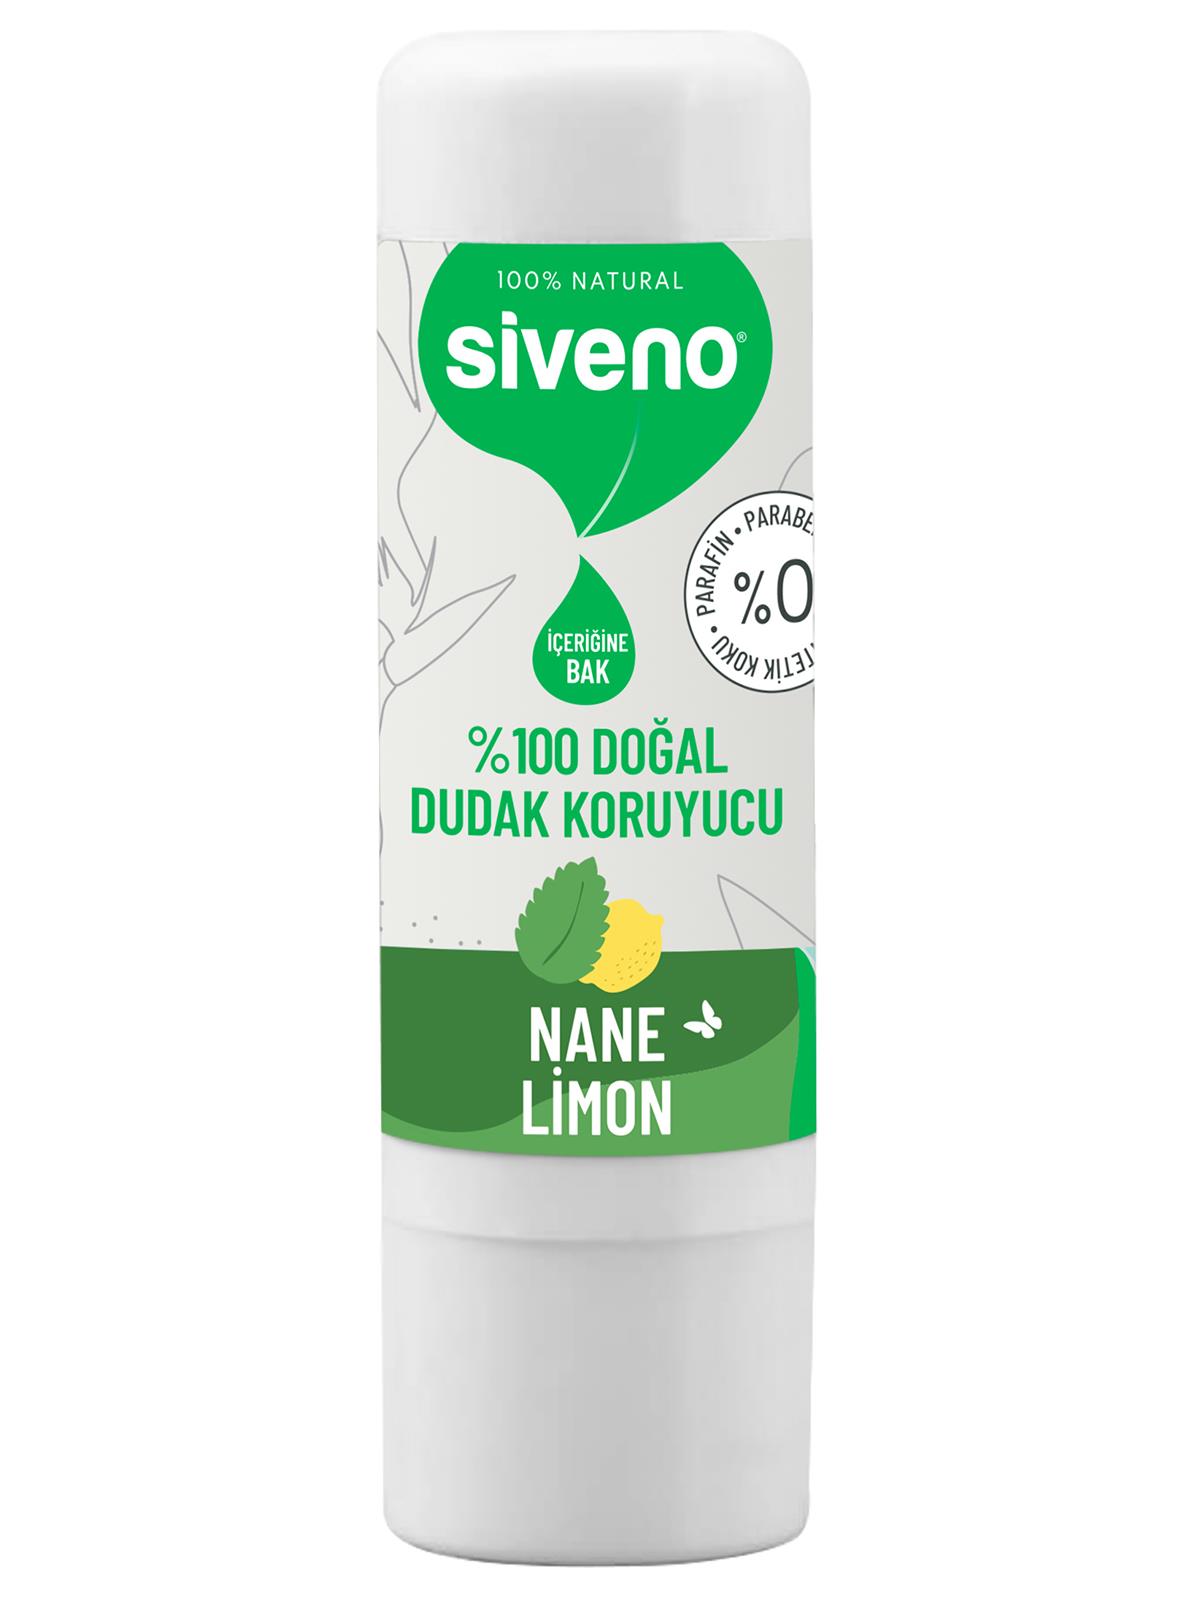 Siveno Doğal Dudak Koruyucu Nane & Limon 6g